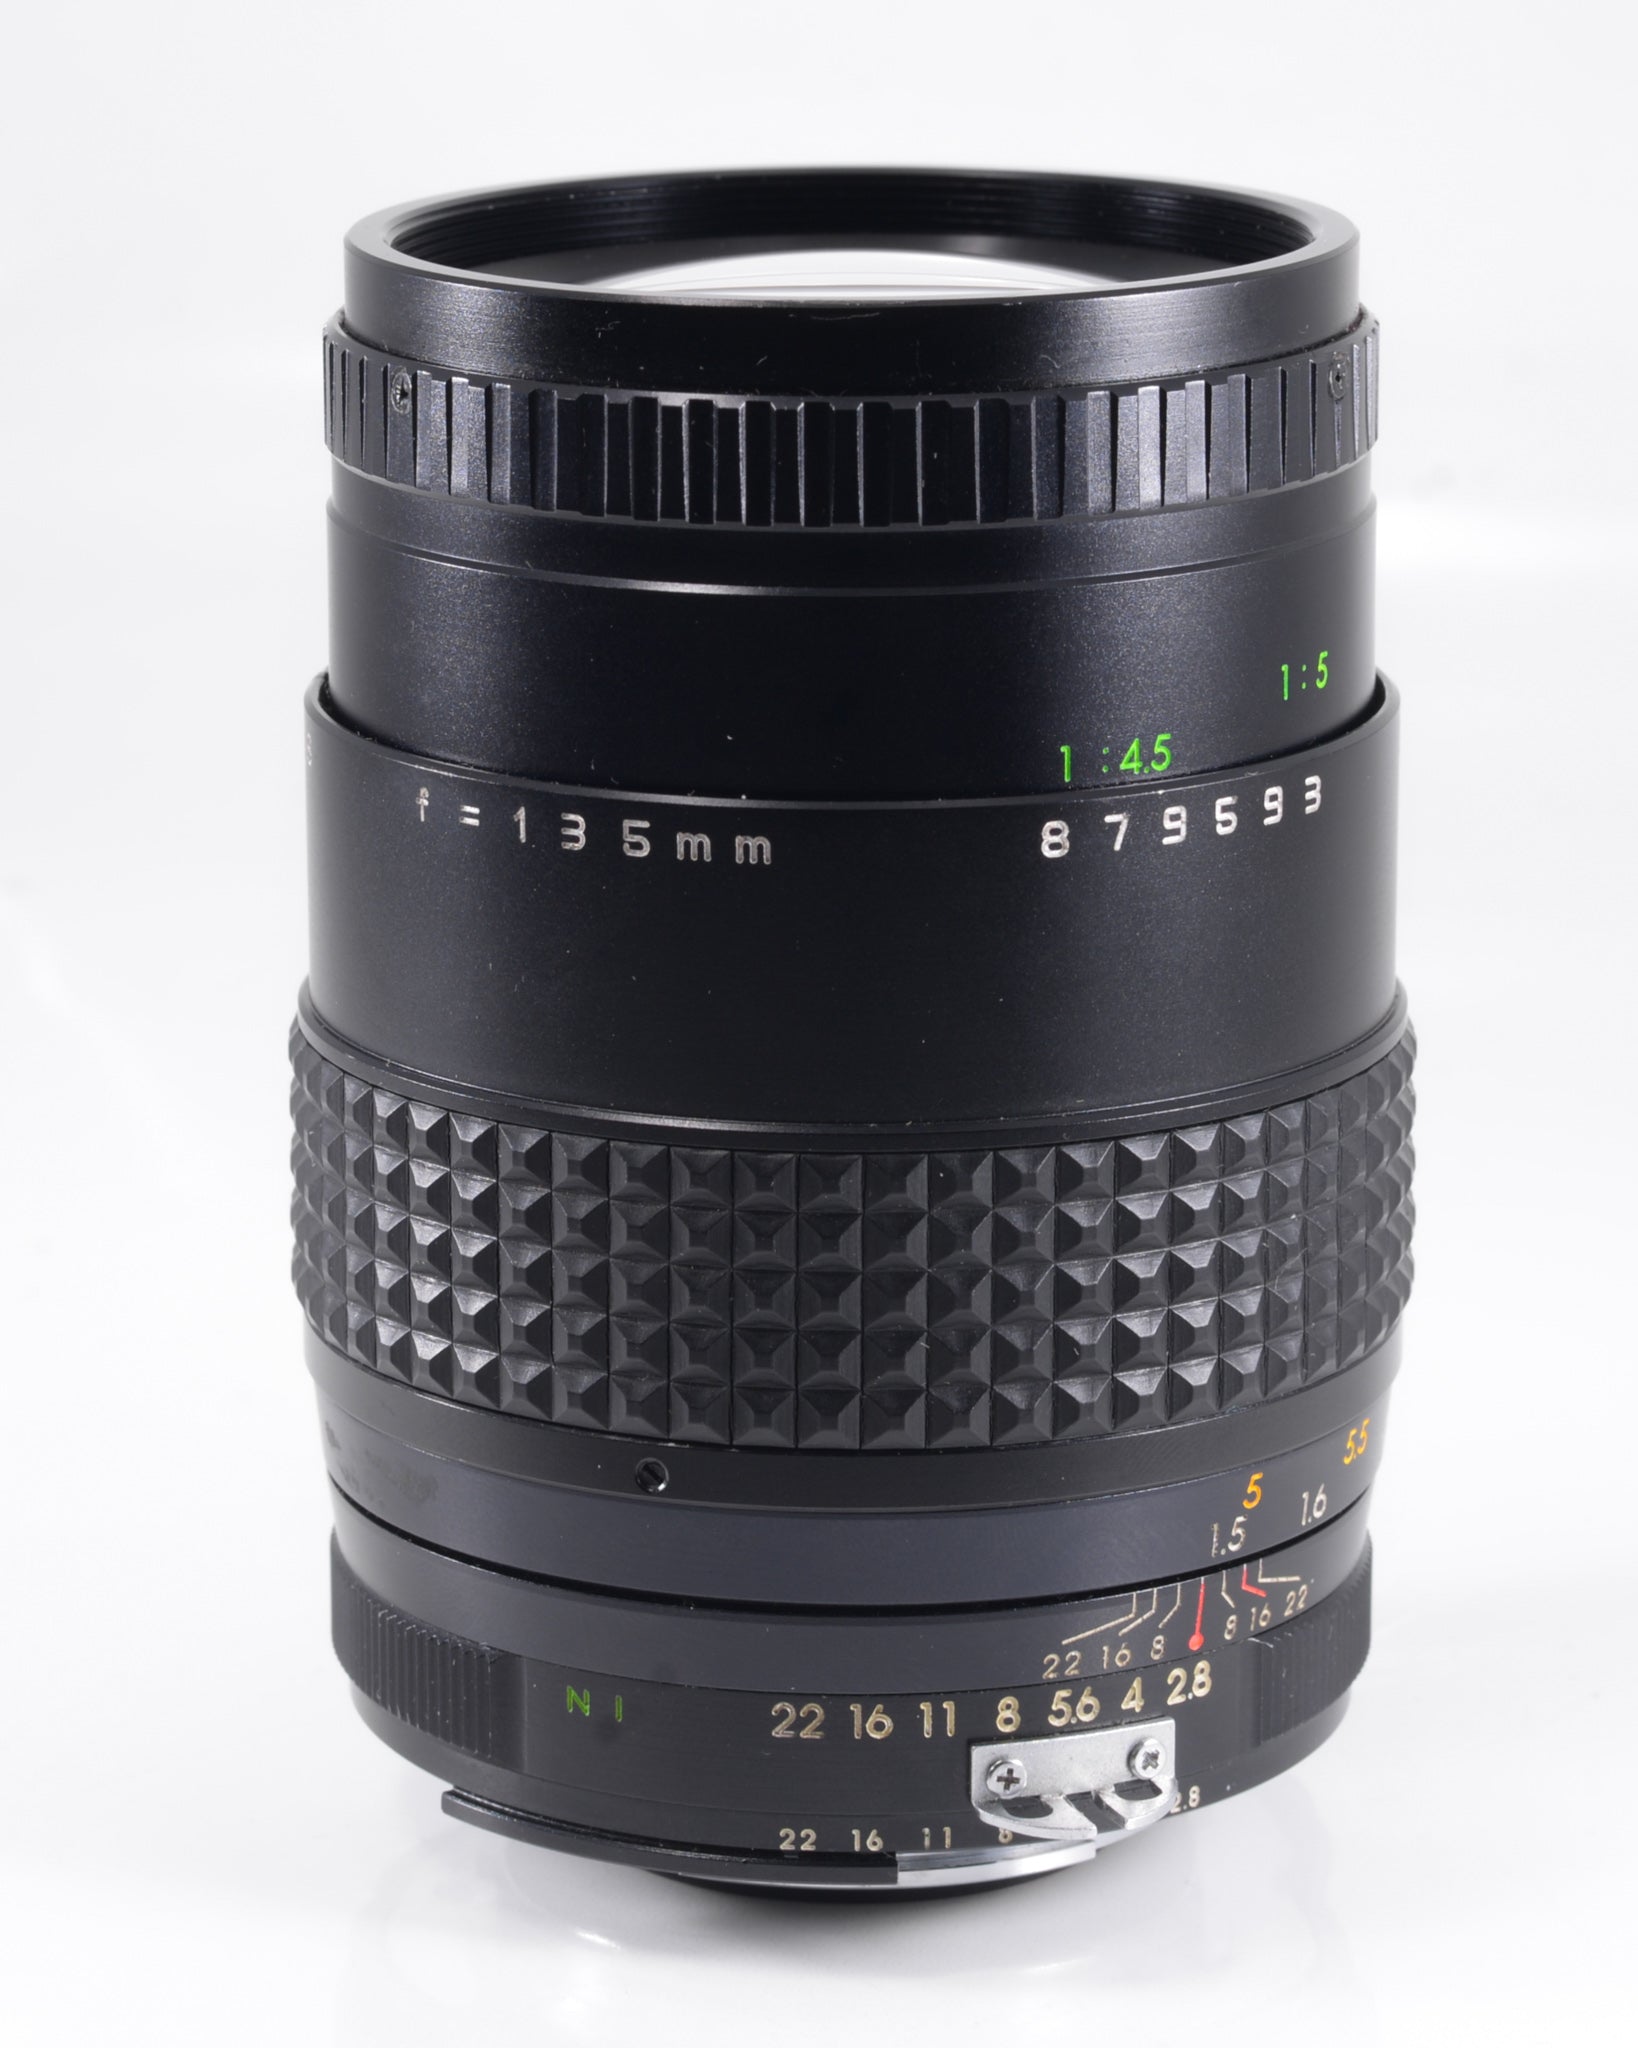 Makinon 135mm f2.8 Nikon F lens